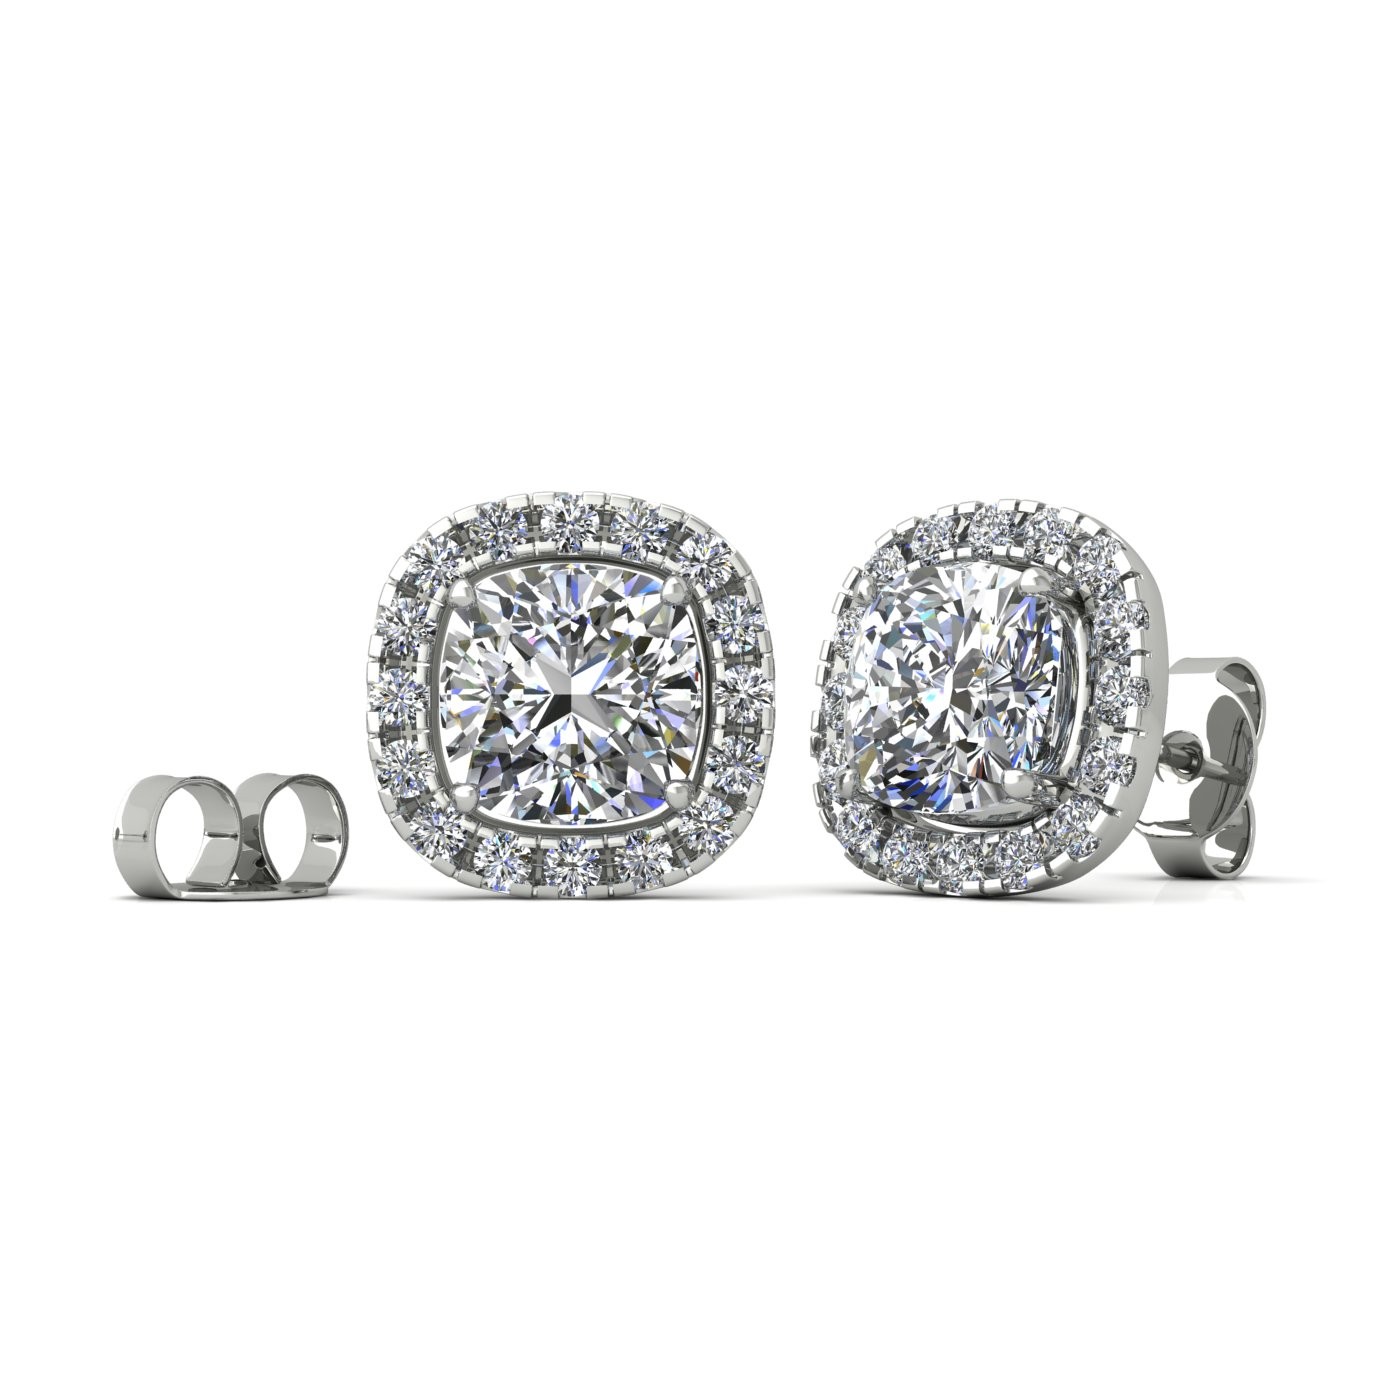 18k white gold  0,5 ct each (1,0 tcw) 4 prongs cushion shape diamond earrings with diamond pavÉ set halo Photos & images